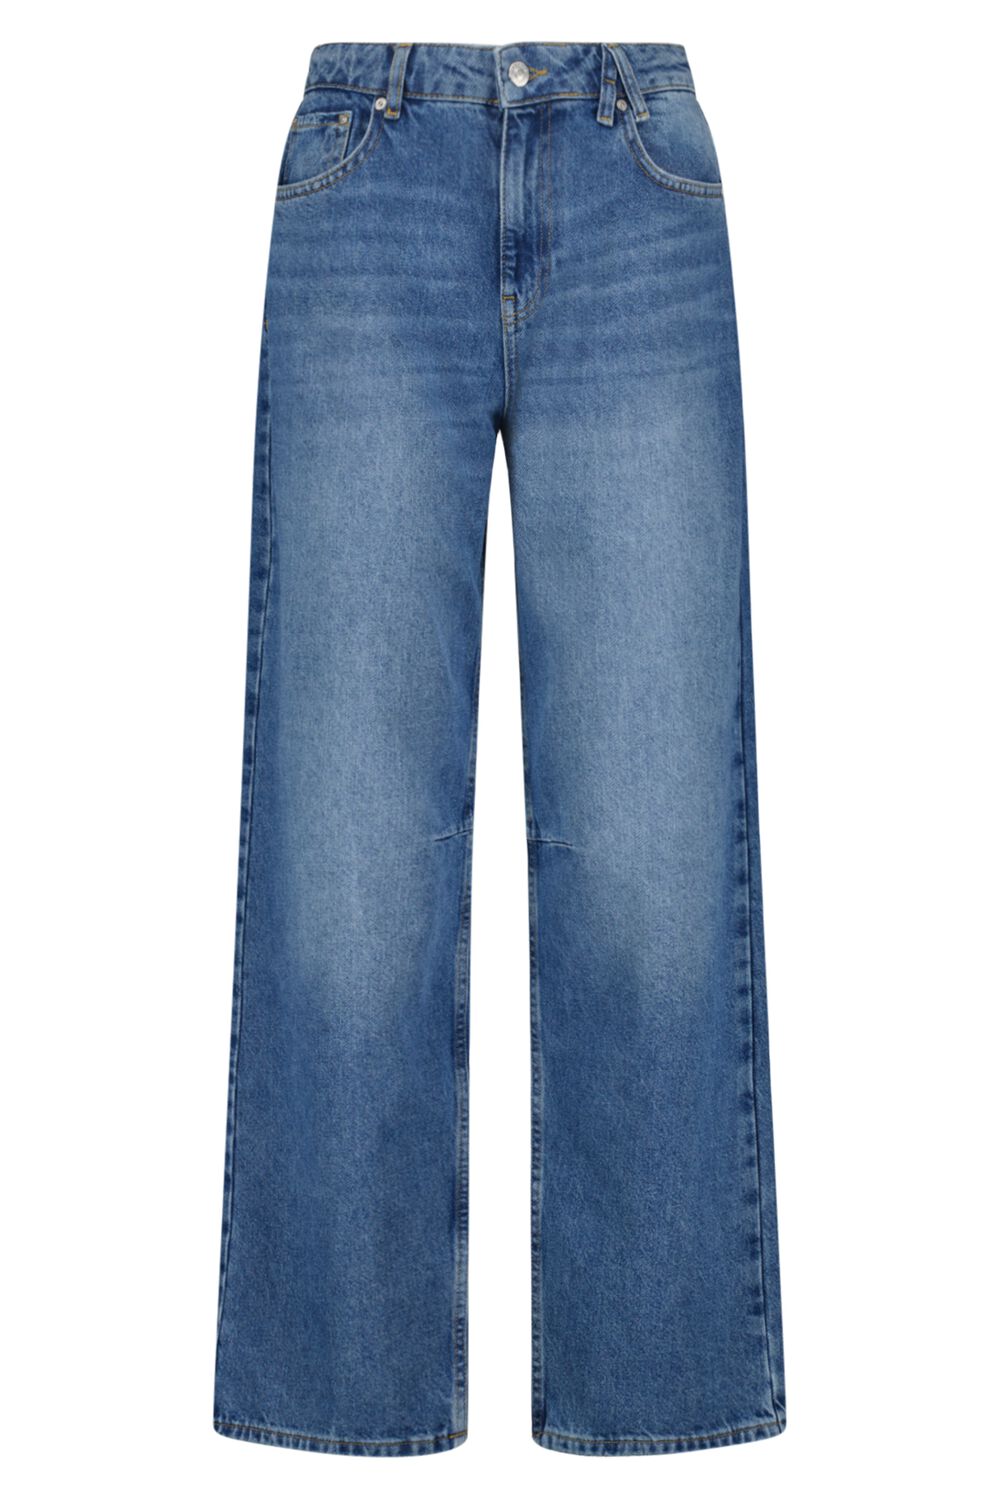 America Today Dames Jeans Reno Blauw